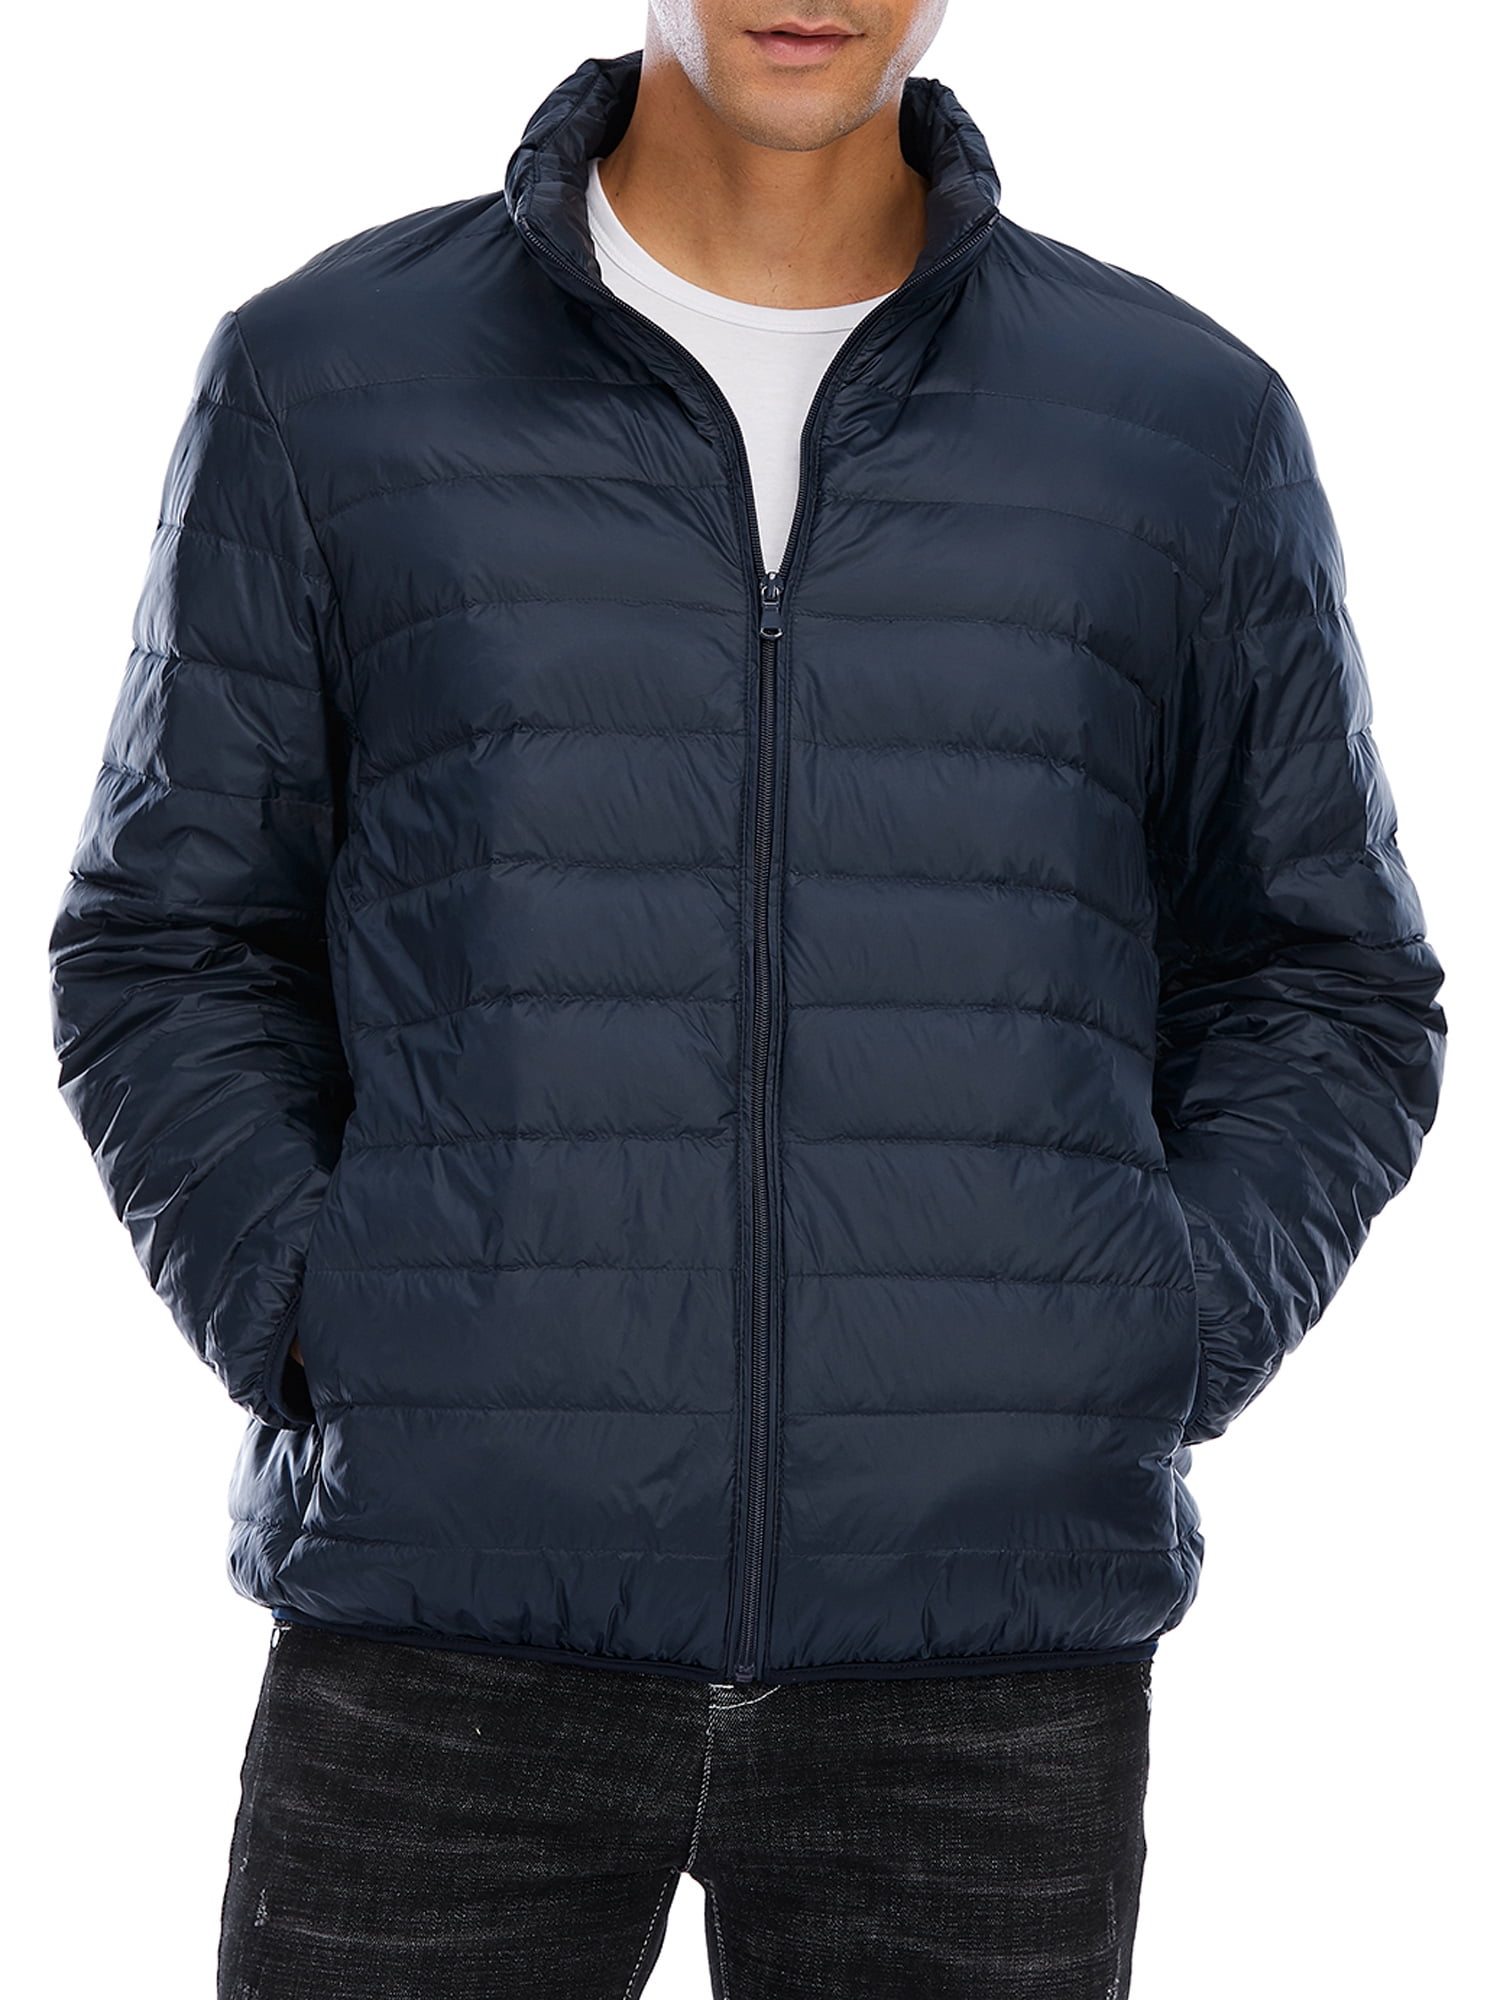 Men's Packable Down Jacket Winter Warm Jacket lightweight Zipper Jacket ...